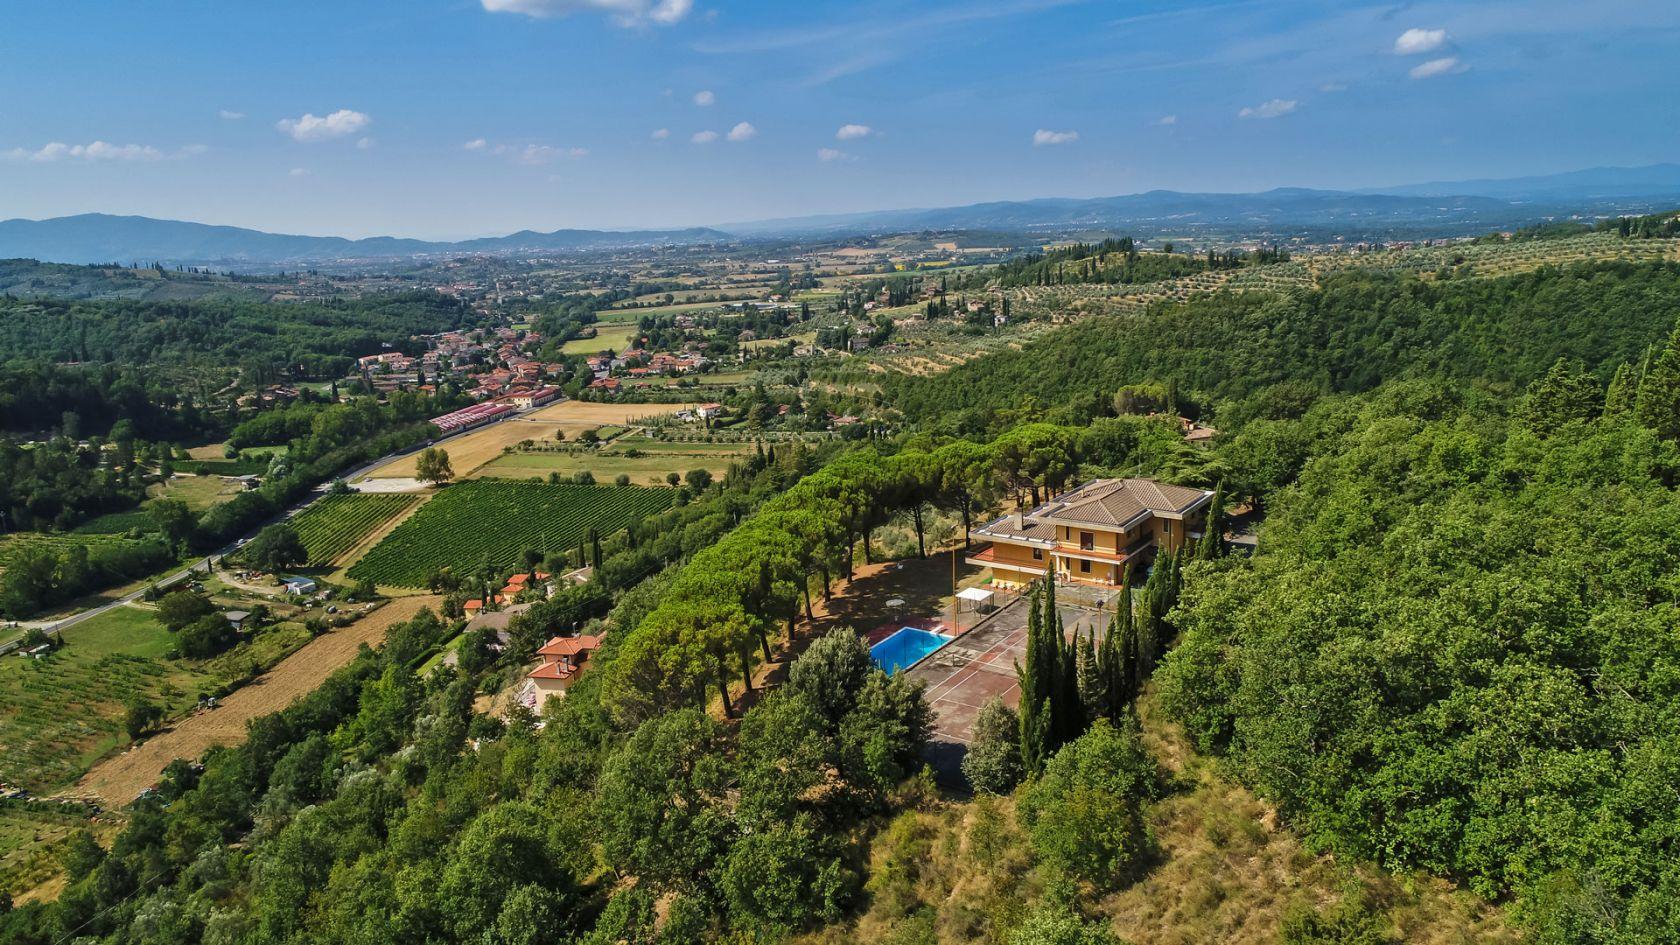 Toscana Immobiliare - Villa moderna con piscina panoramica in vendita in Toscana